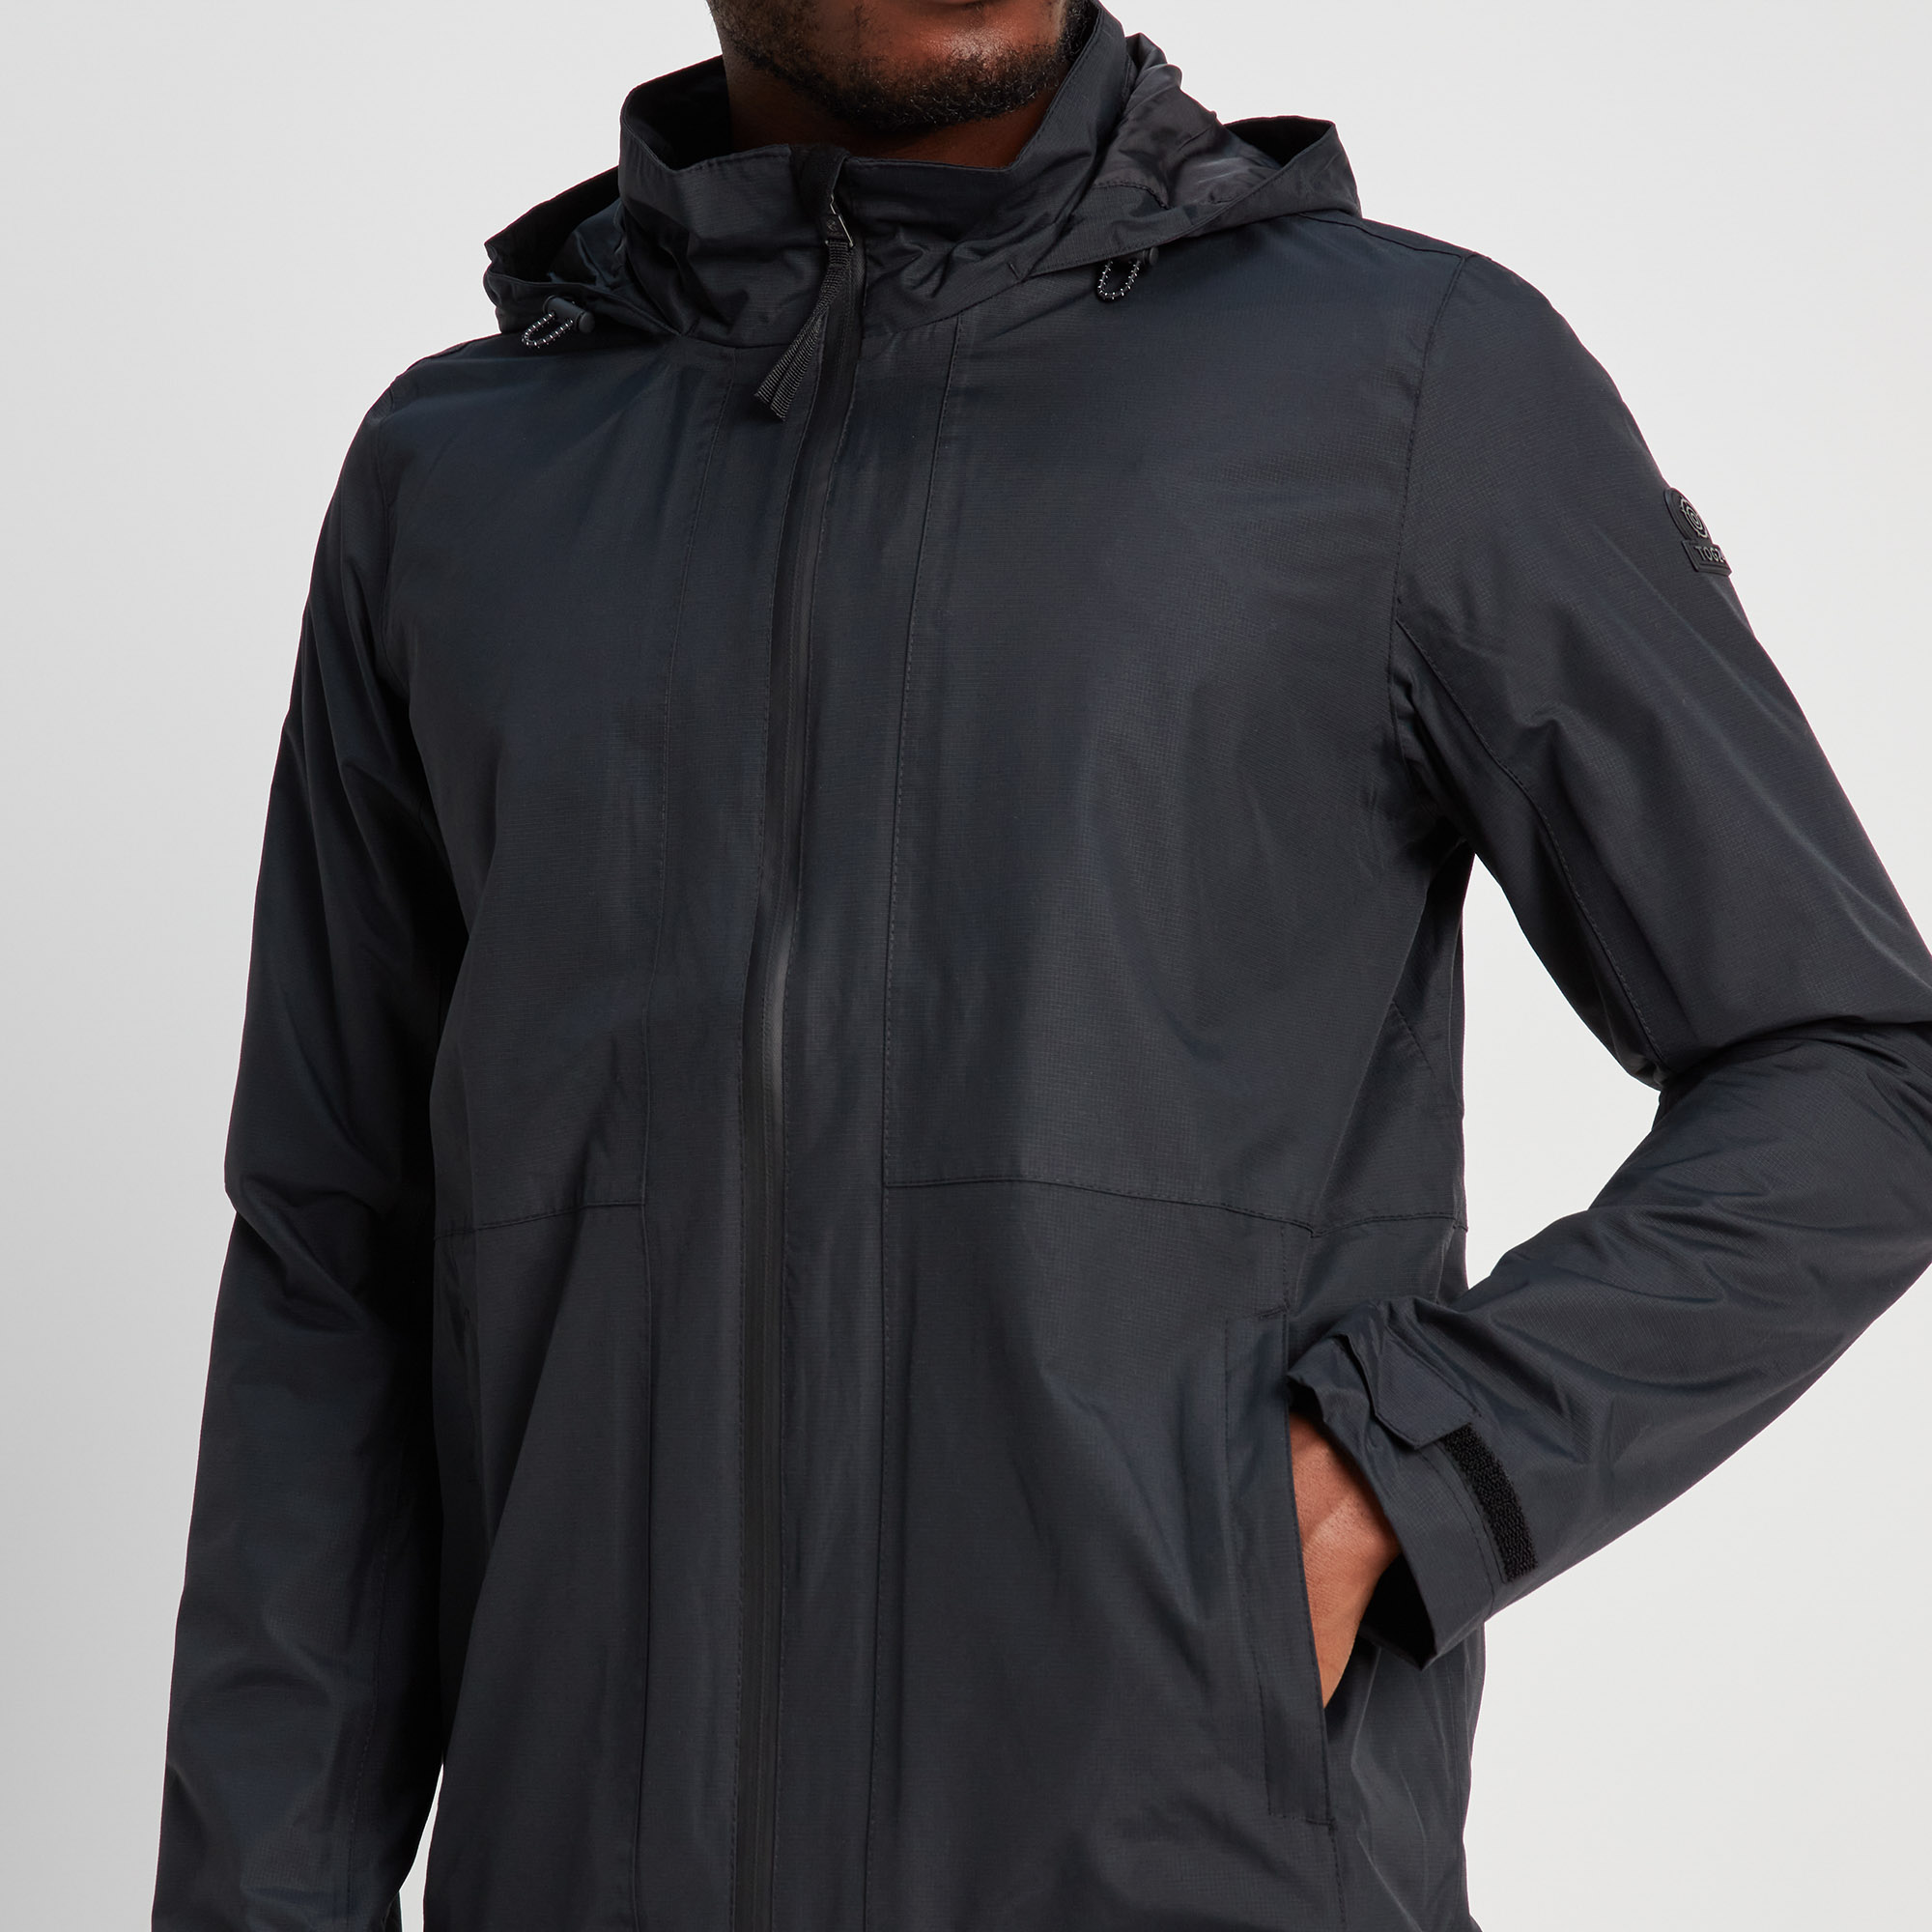 TOG24 Gribton Mens Hooded Waterproof Jacket Raincoat Breathable ...